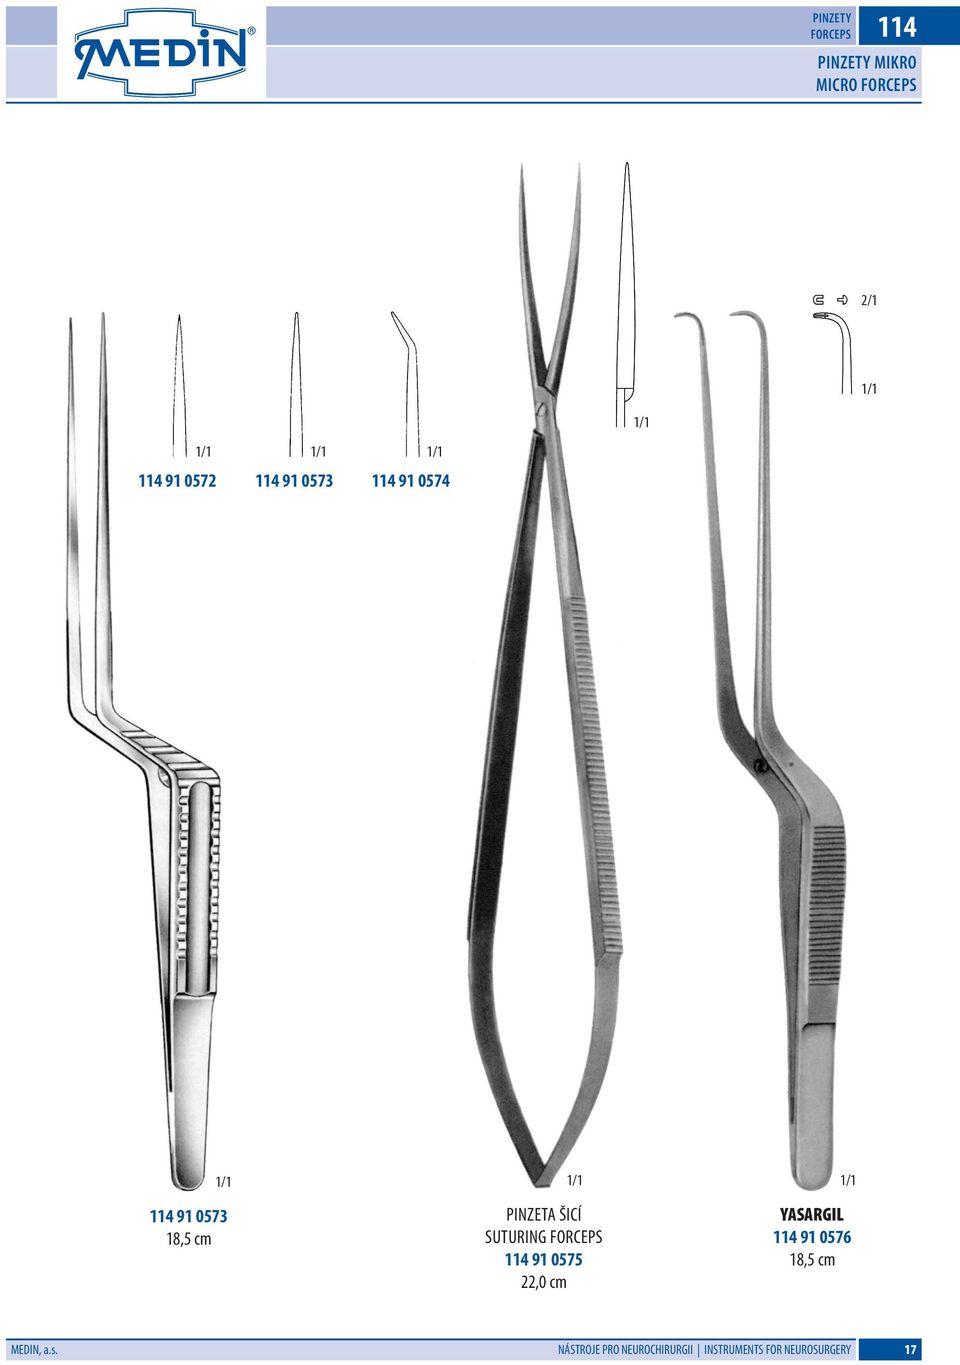 suturing forceps 114 91 0575 22,0 cm YASARGIL 114 91 0576 18,5